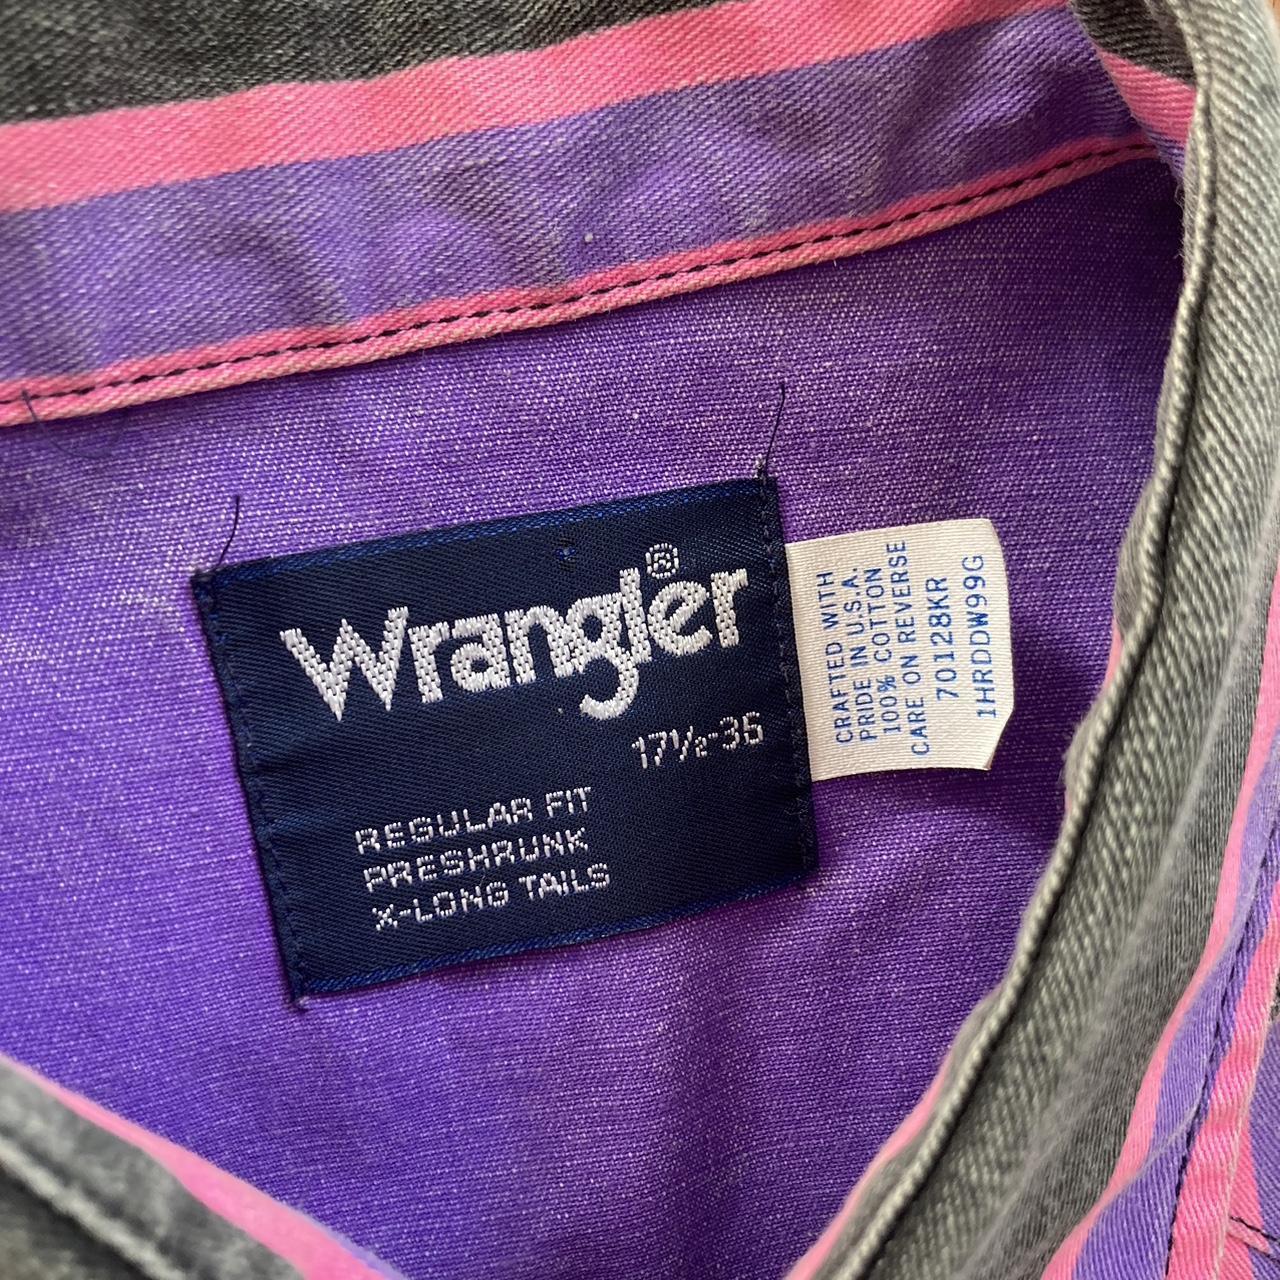 Wrangler Men's Pink and Purple Shirt | Depop